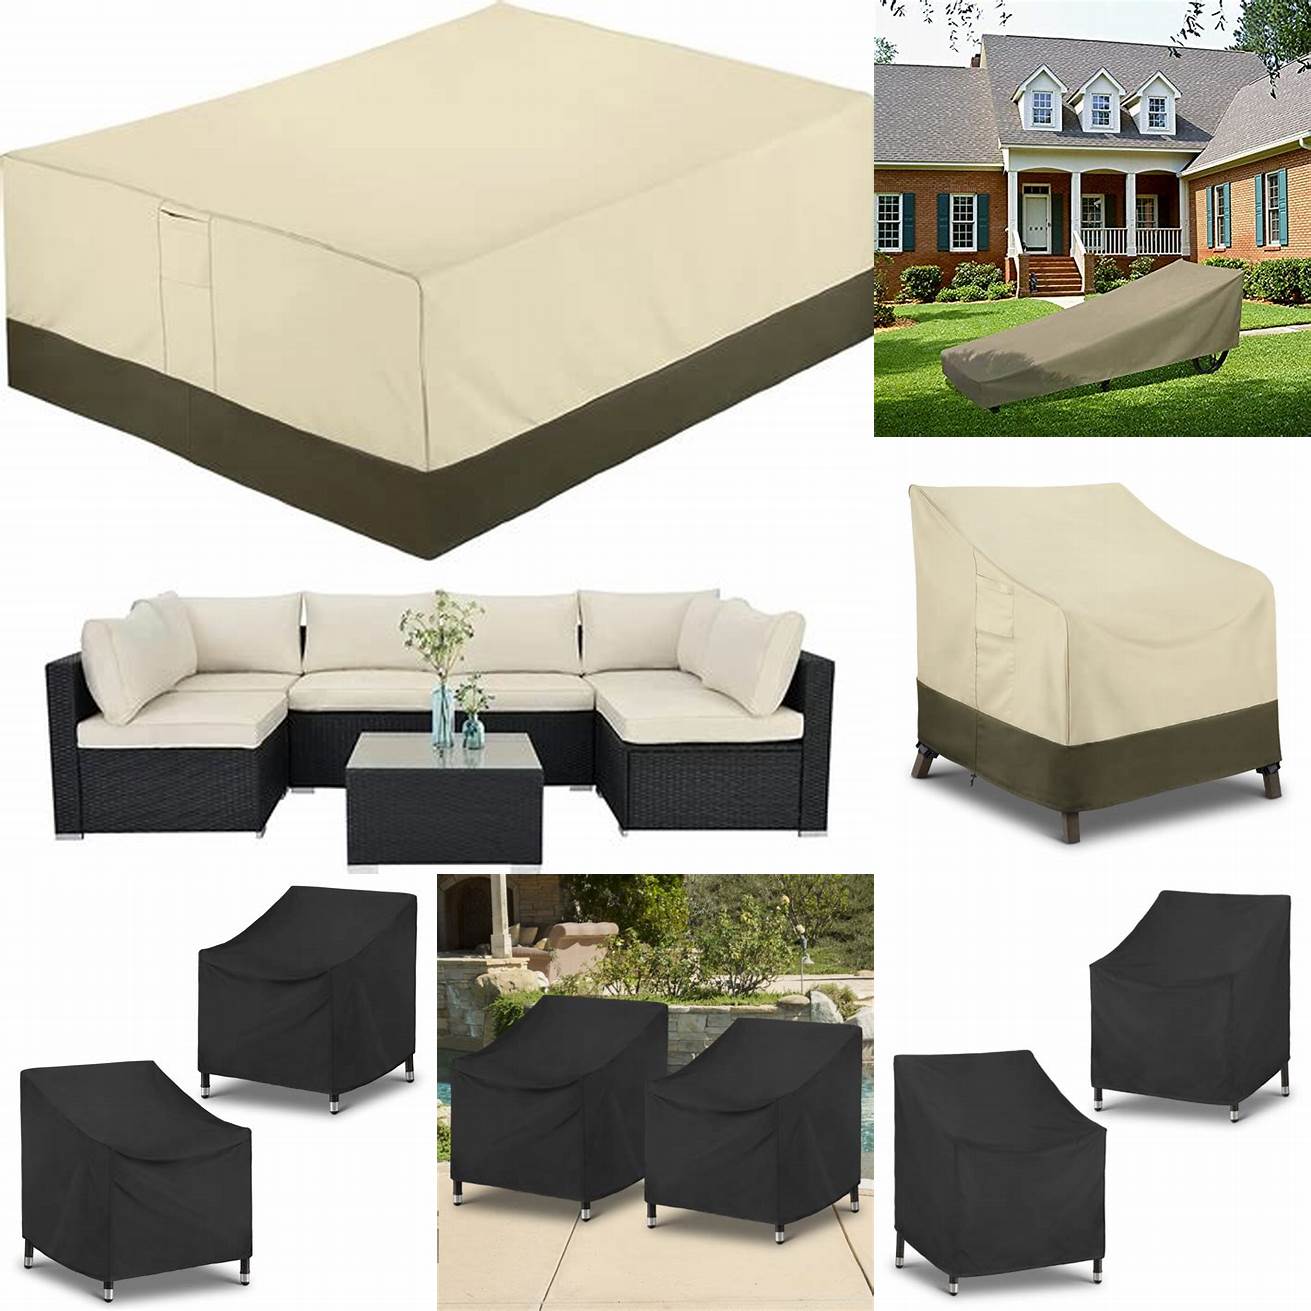 SunPatio Outdoor Furniture Cover